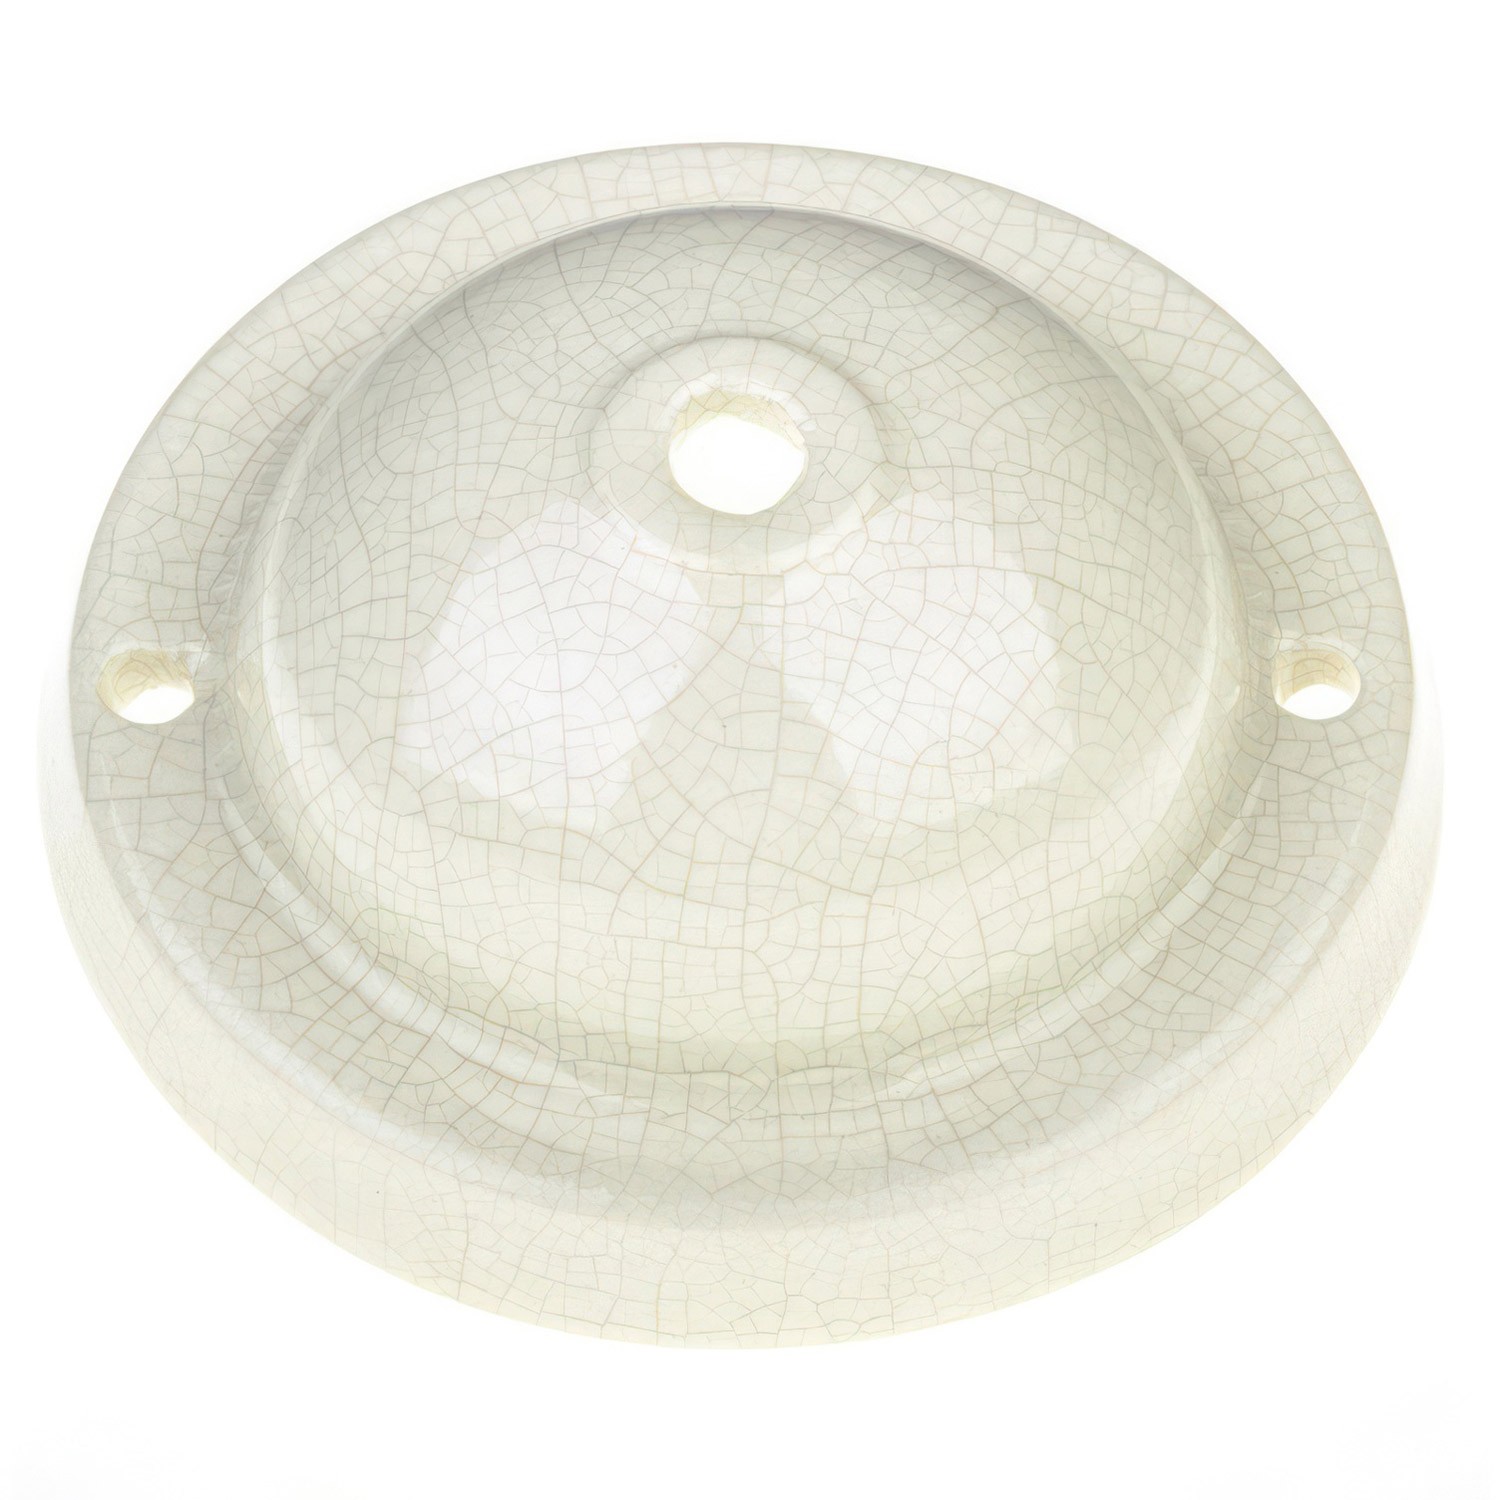 Einfacher Lampenbaldachin Kit aus Keramik